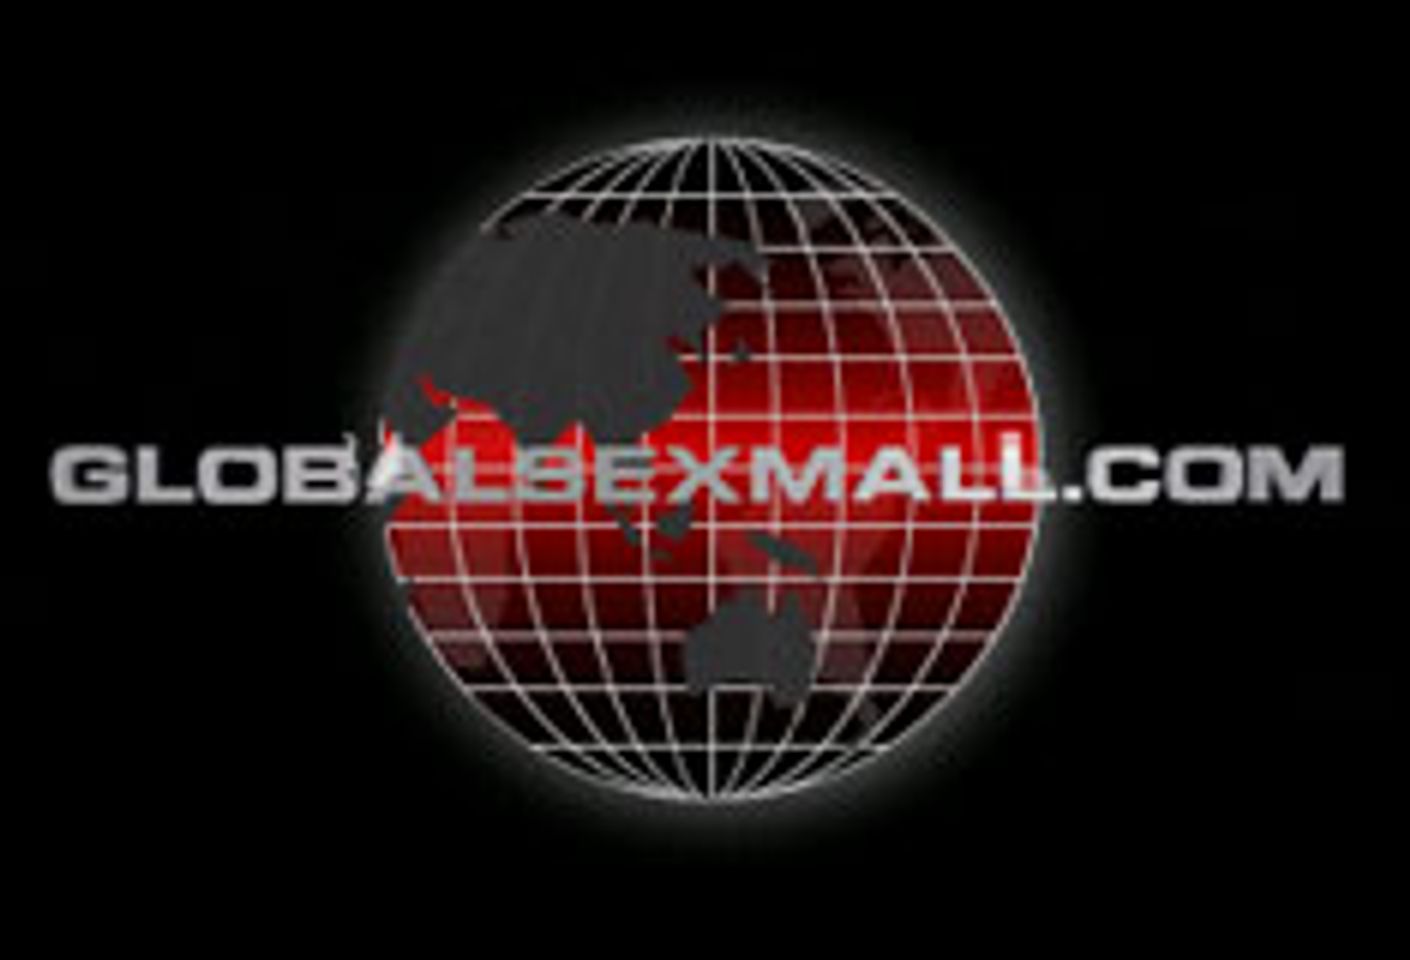 GlobalSexMall.com's Ultimate Shopping Experience